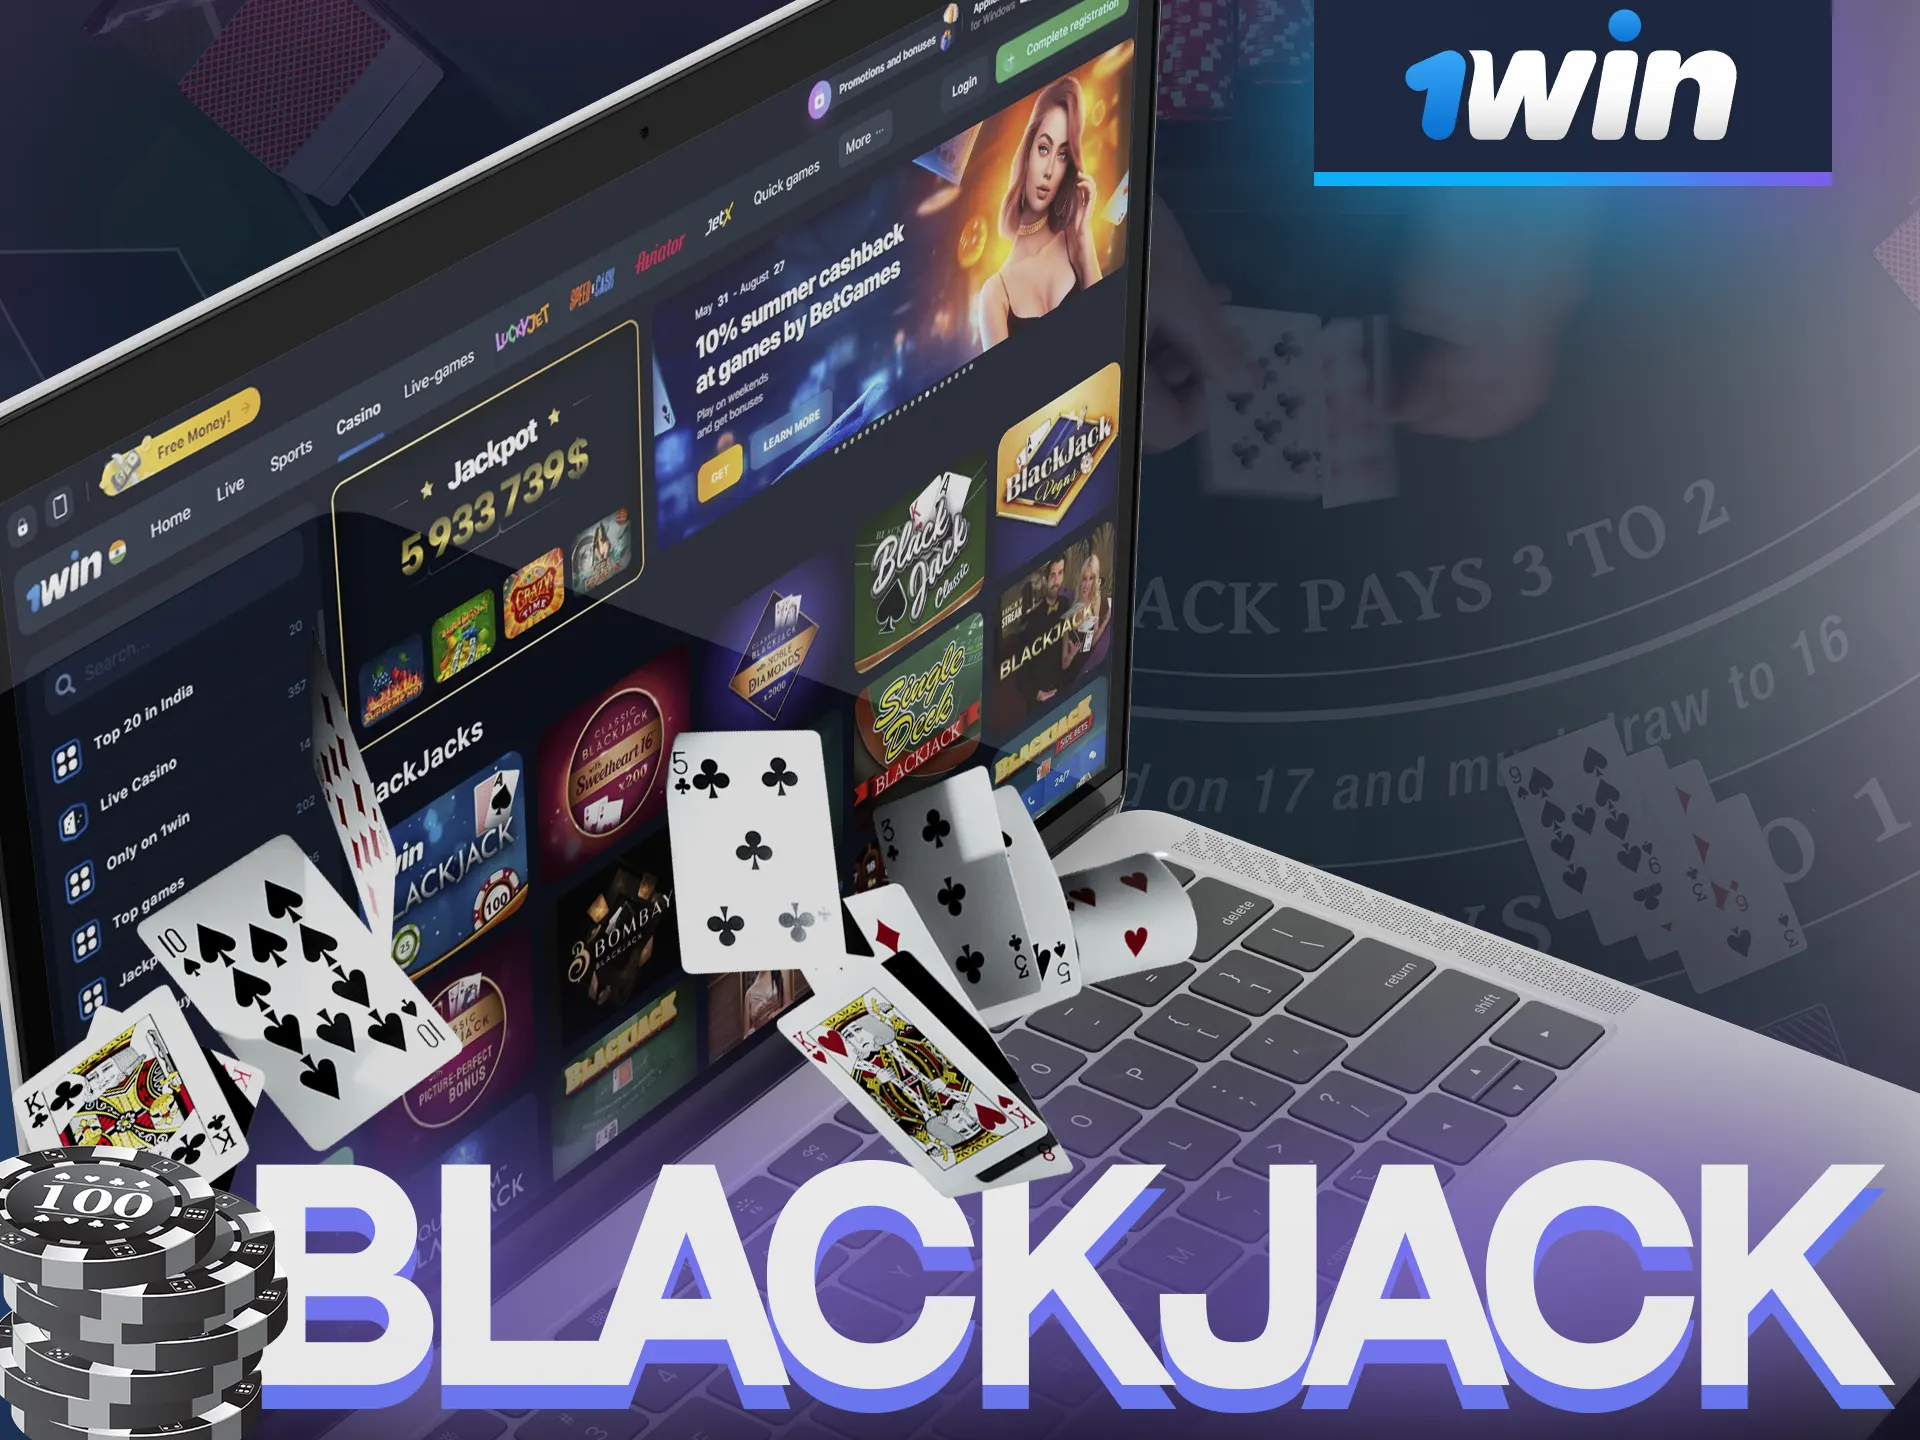 On 1Win, try blackjack games.